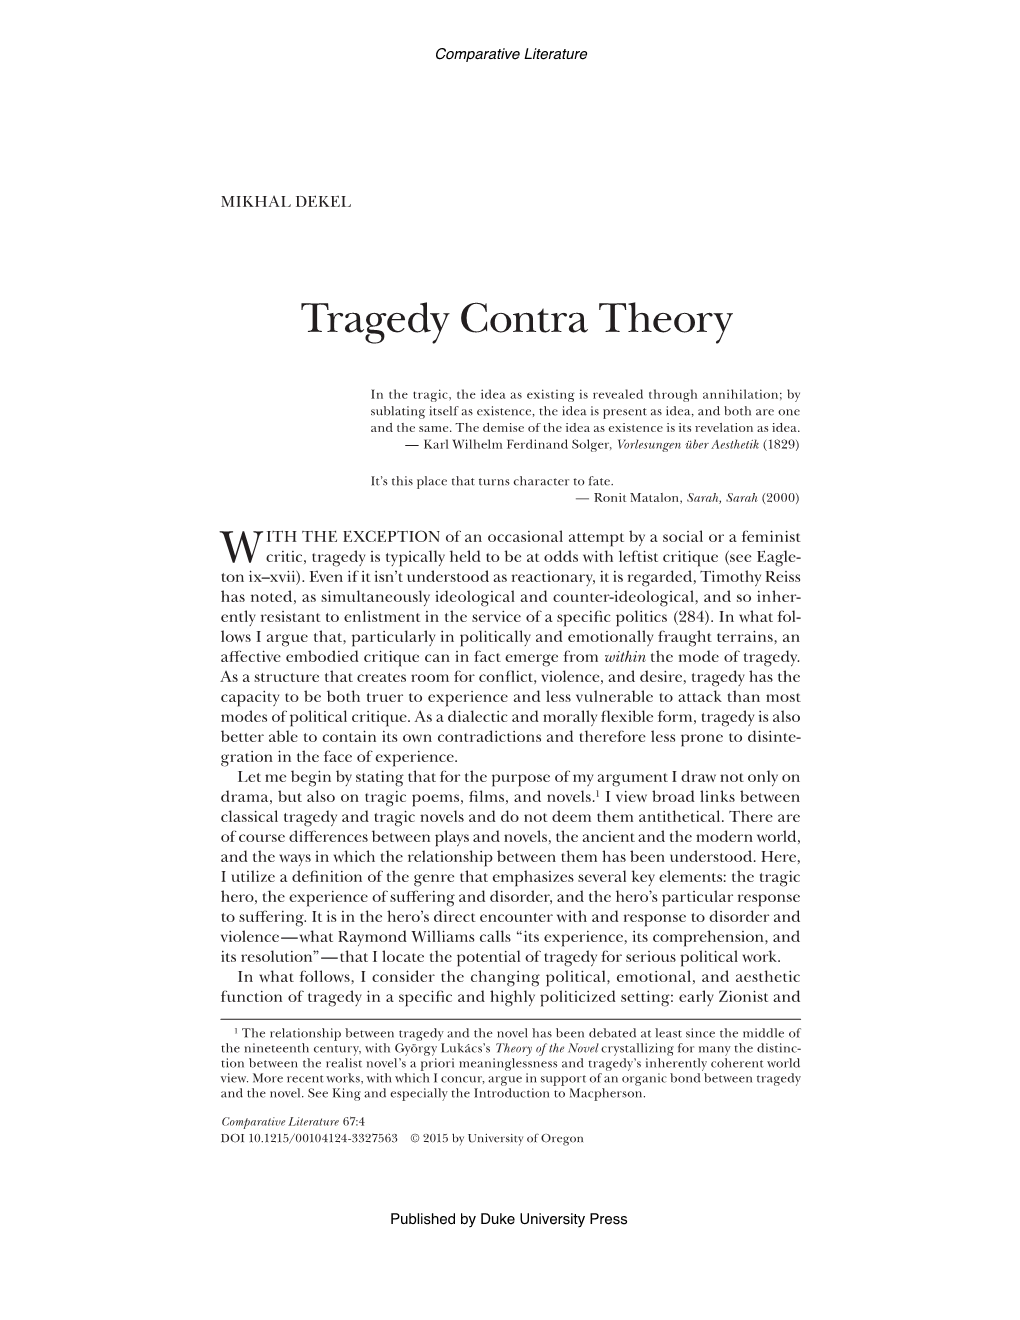 Tragedy Contra Theory